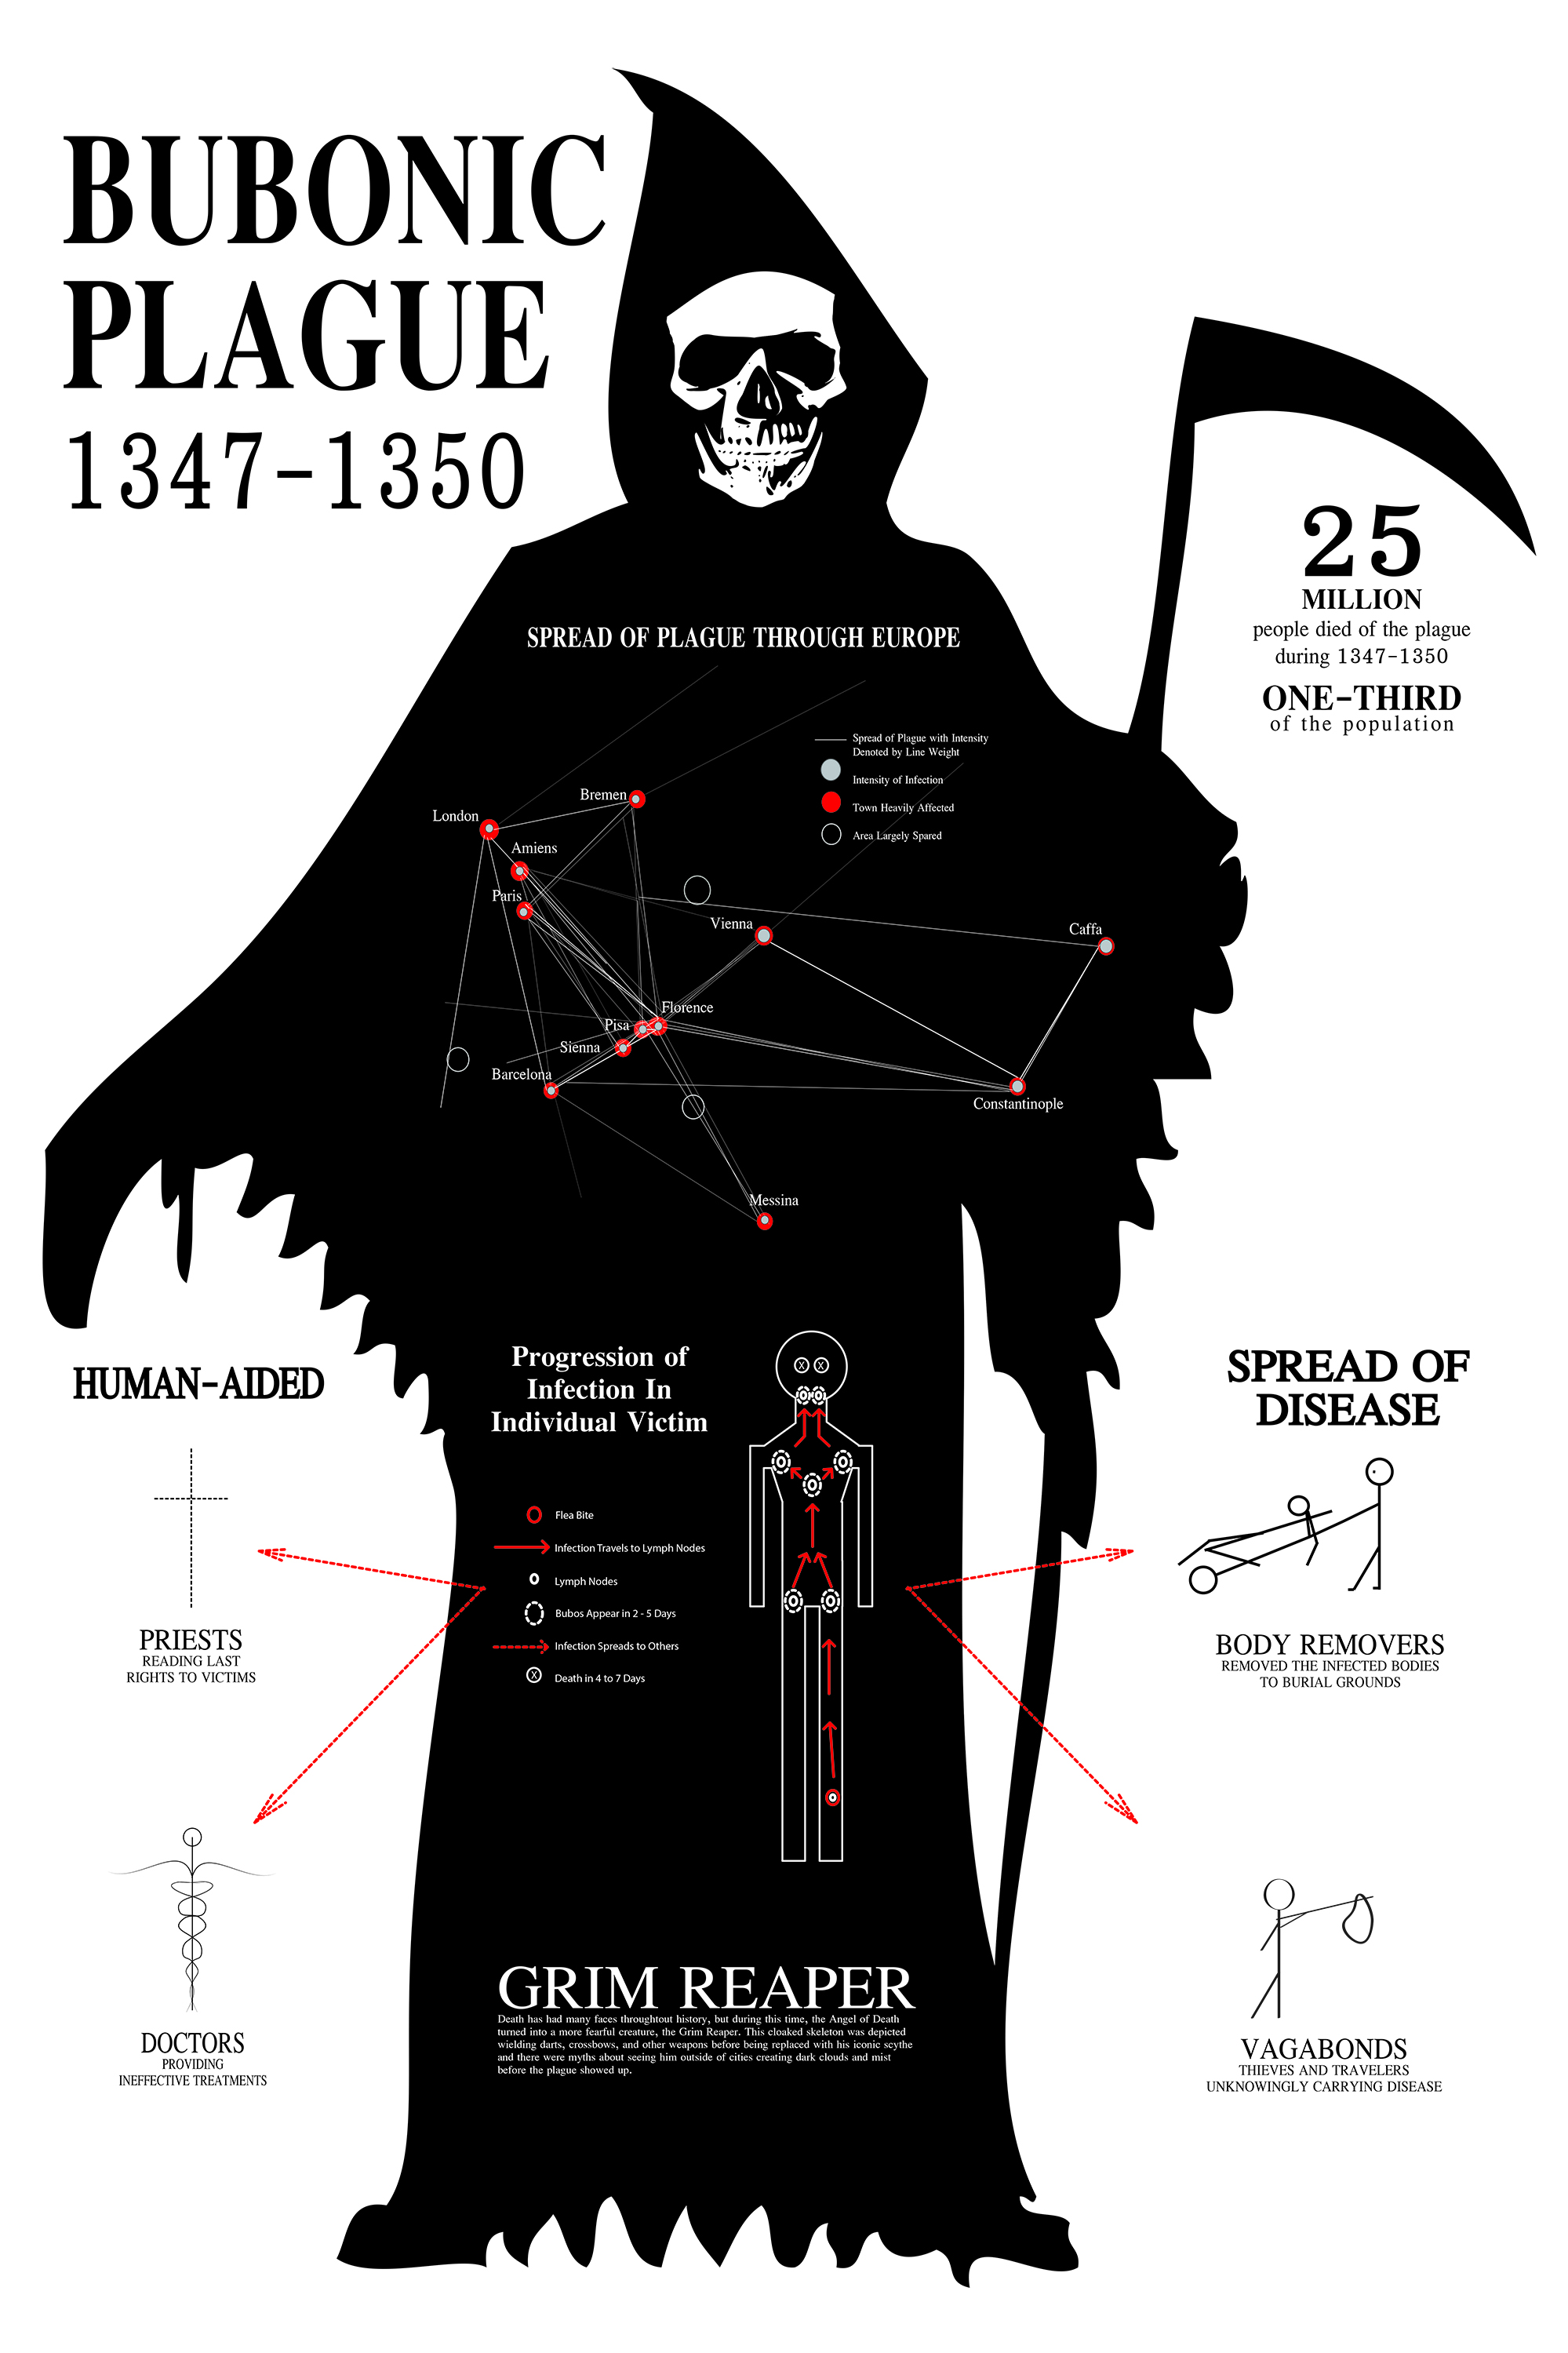 Bubonic Plague Infographic UO Design Communication II